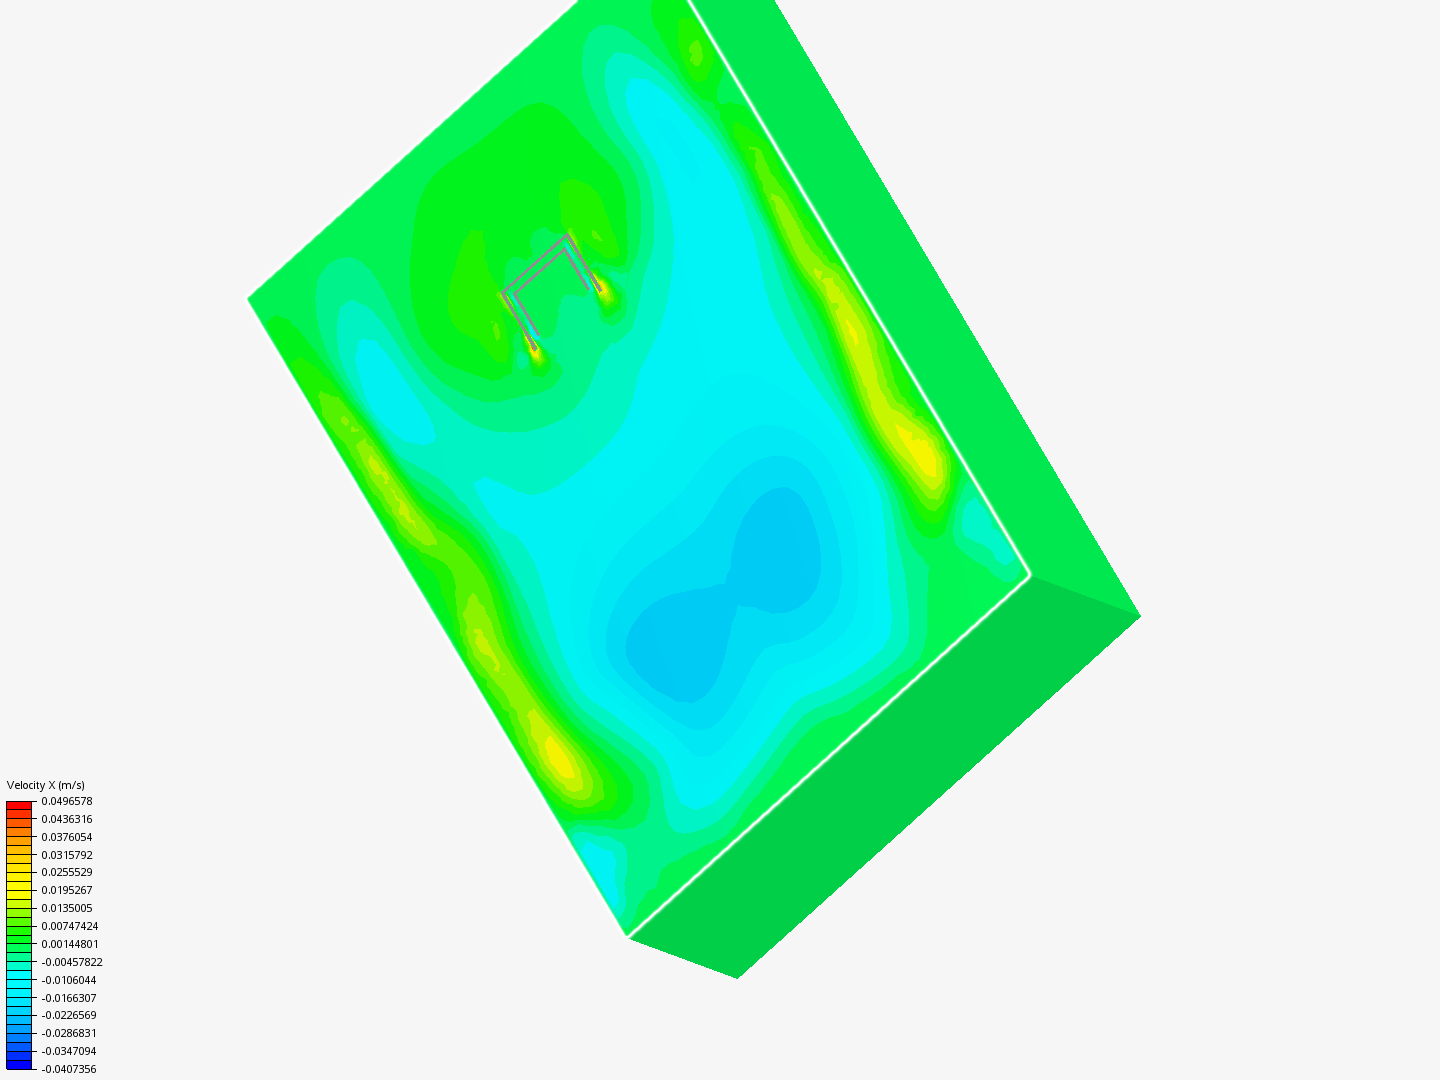 Heat transfer simulation for wavemeter housing image